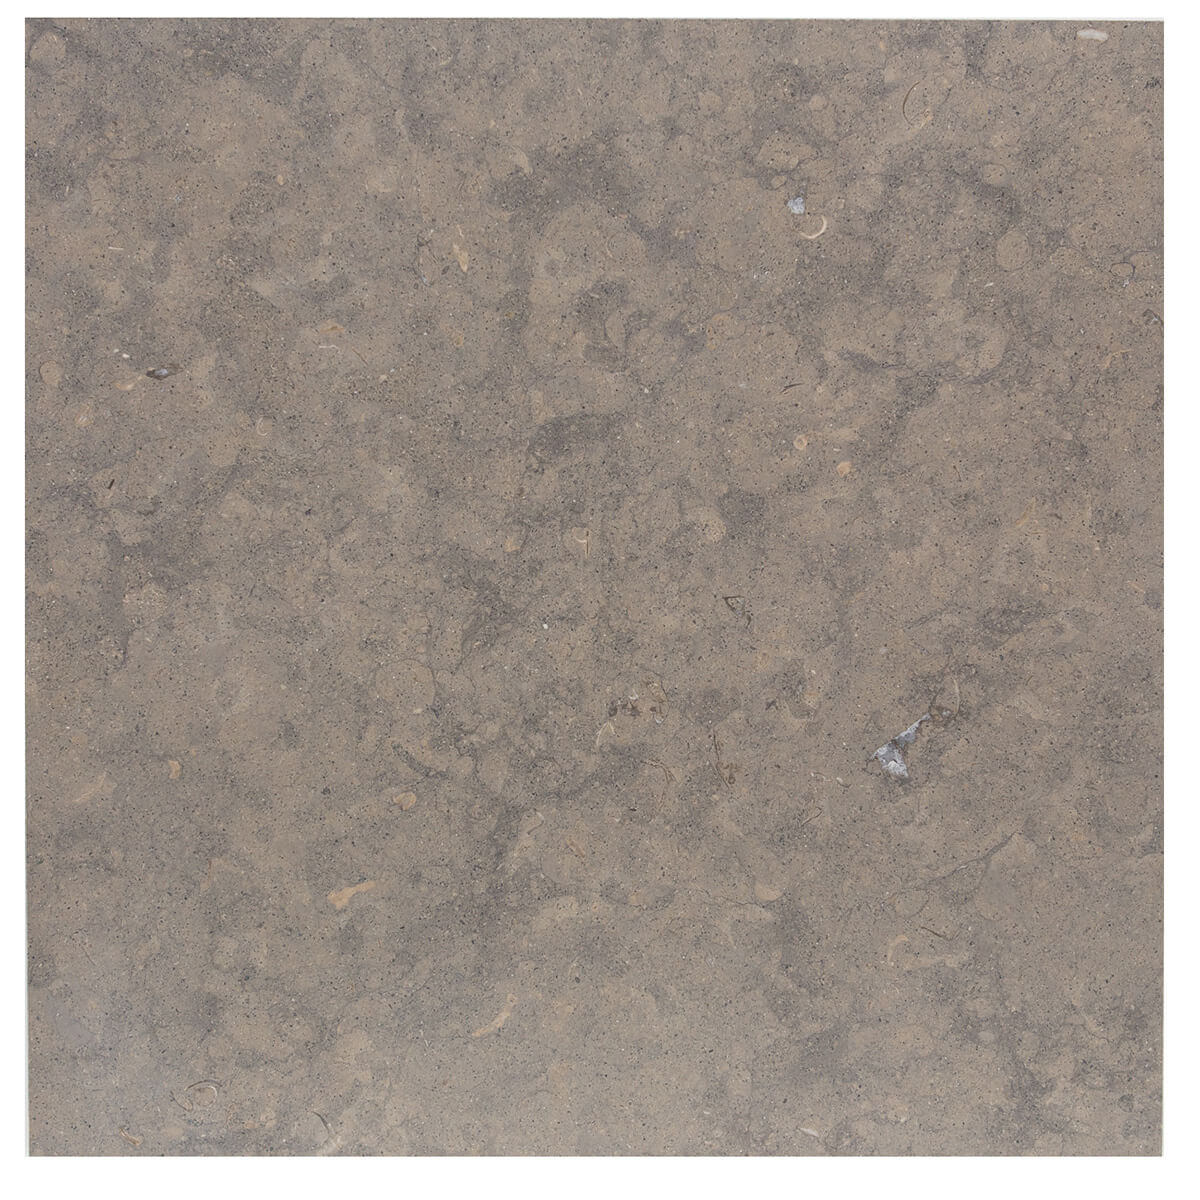 haussmann cote d azur limestone square natural stone field tile 18x18 honed